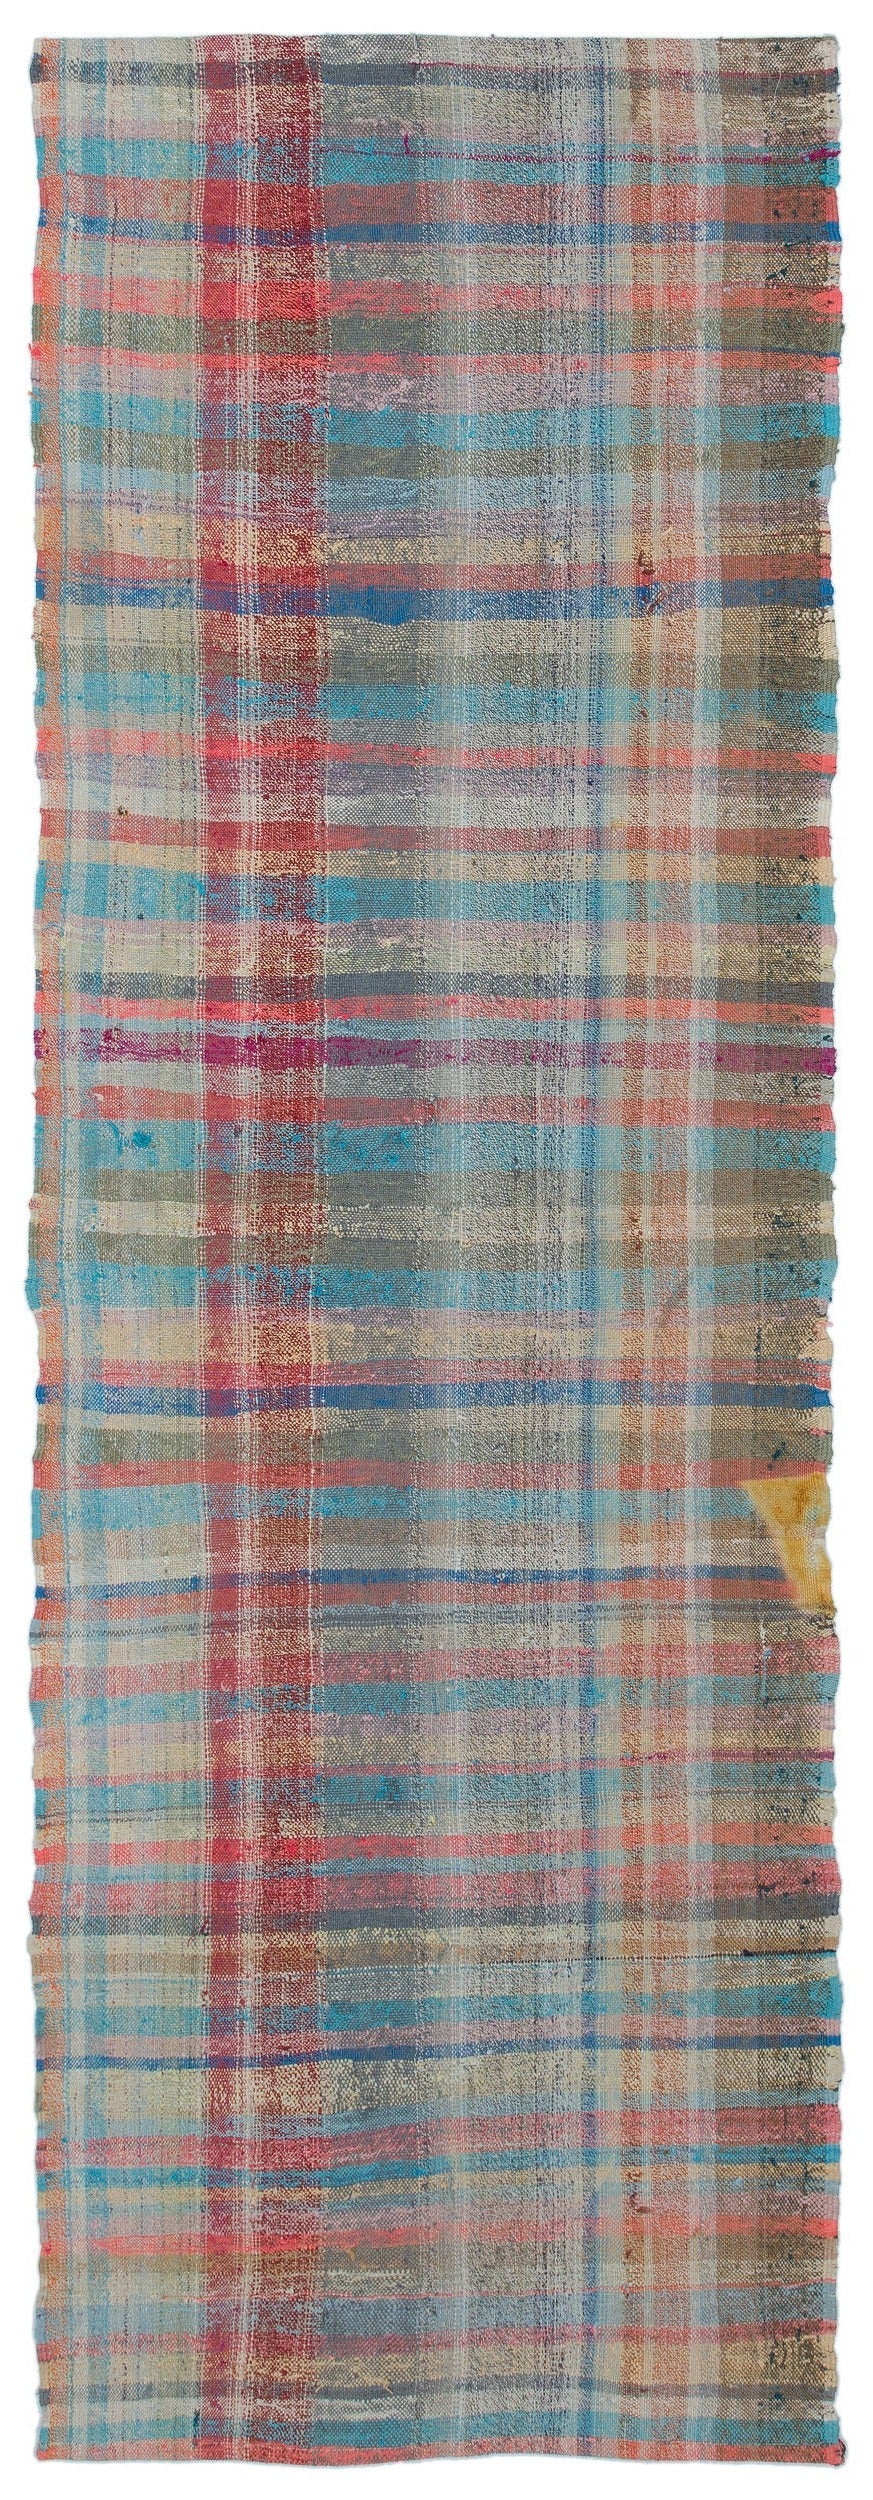 Crete 32621 Gray Striped Wool Hand Woven Carpet 083 x 250